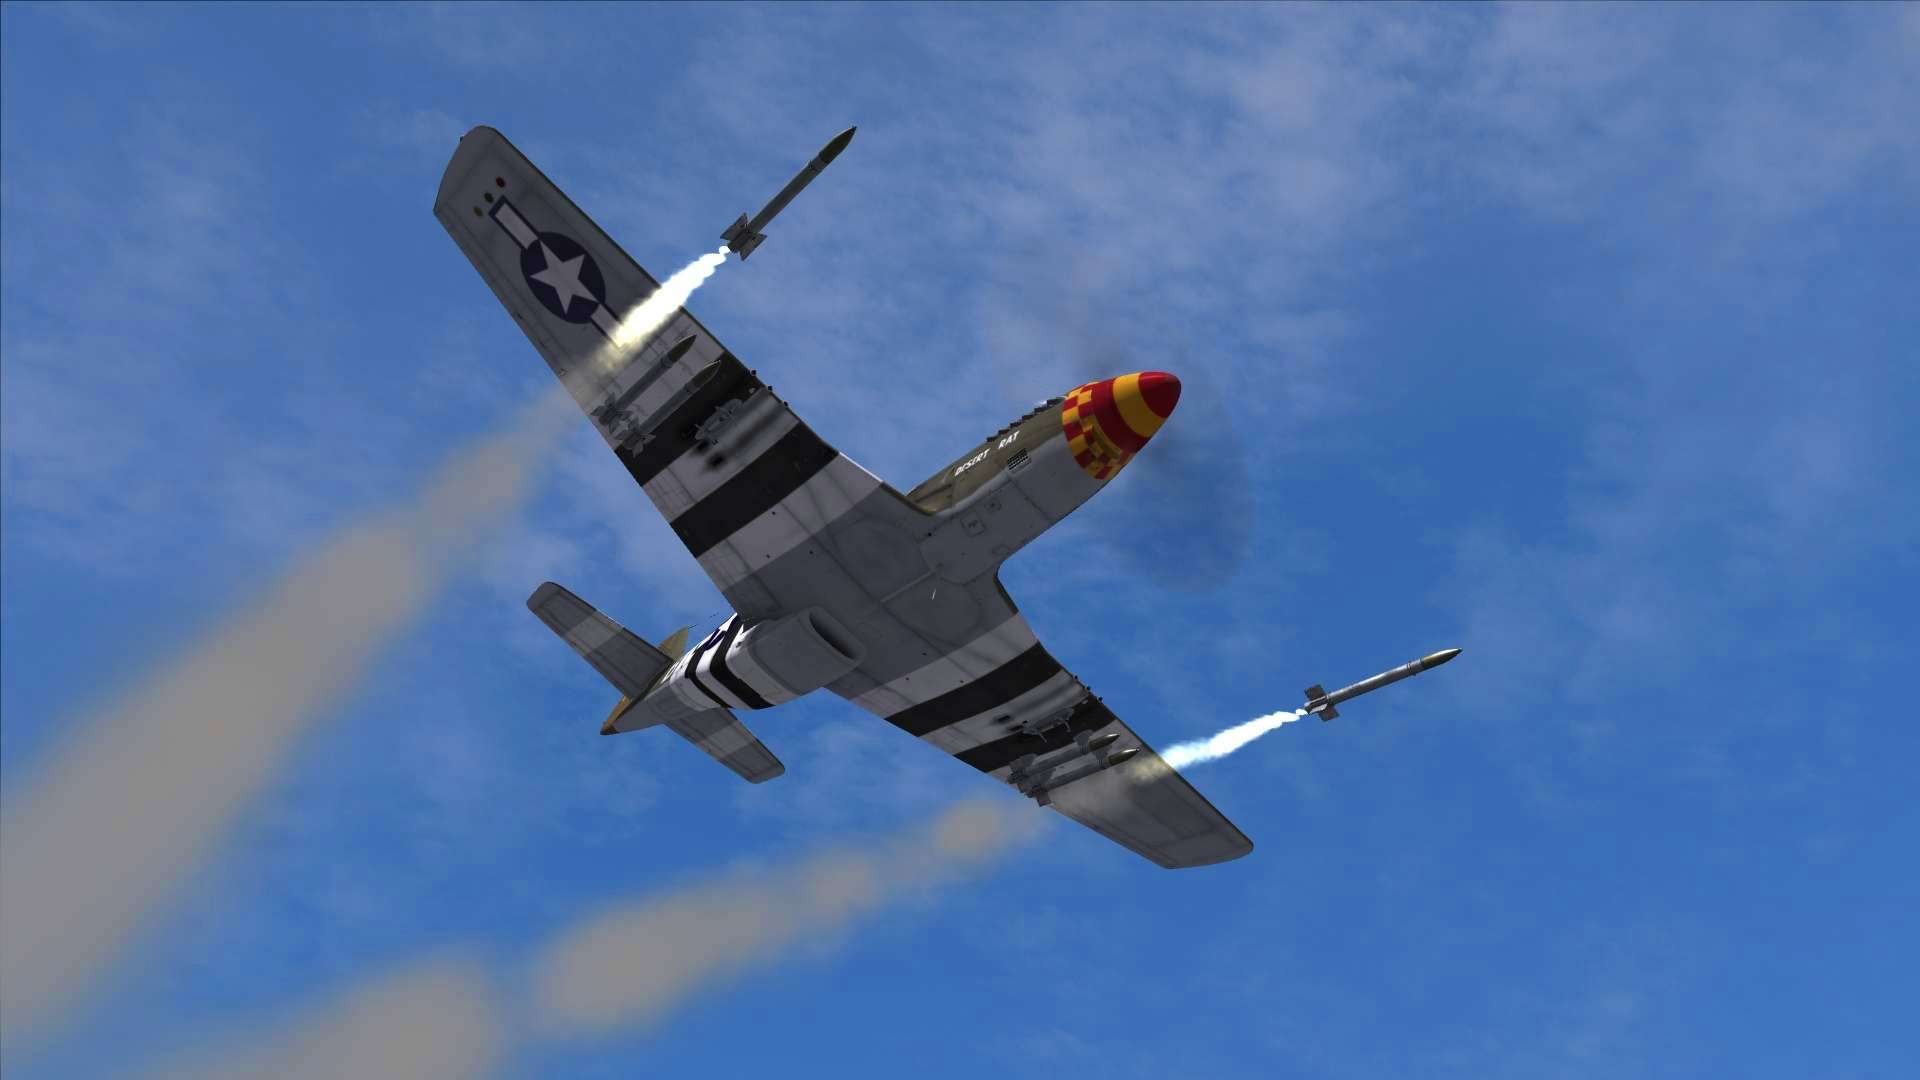 P-51 Wallpaper - Bing images